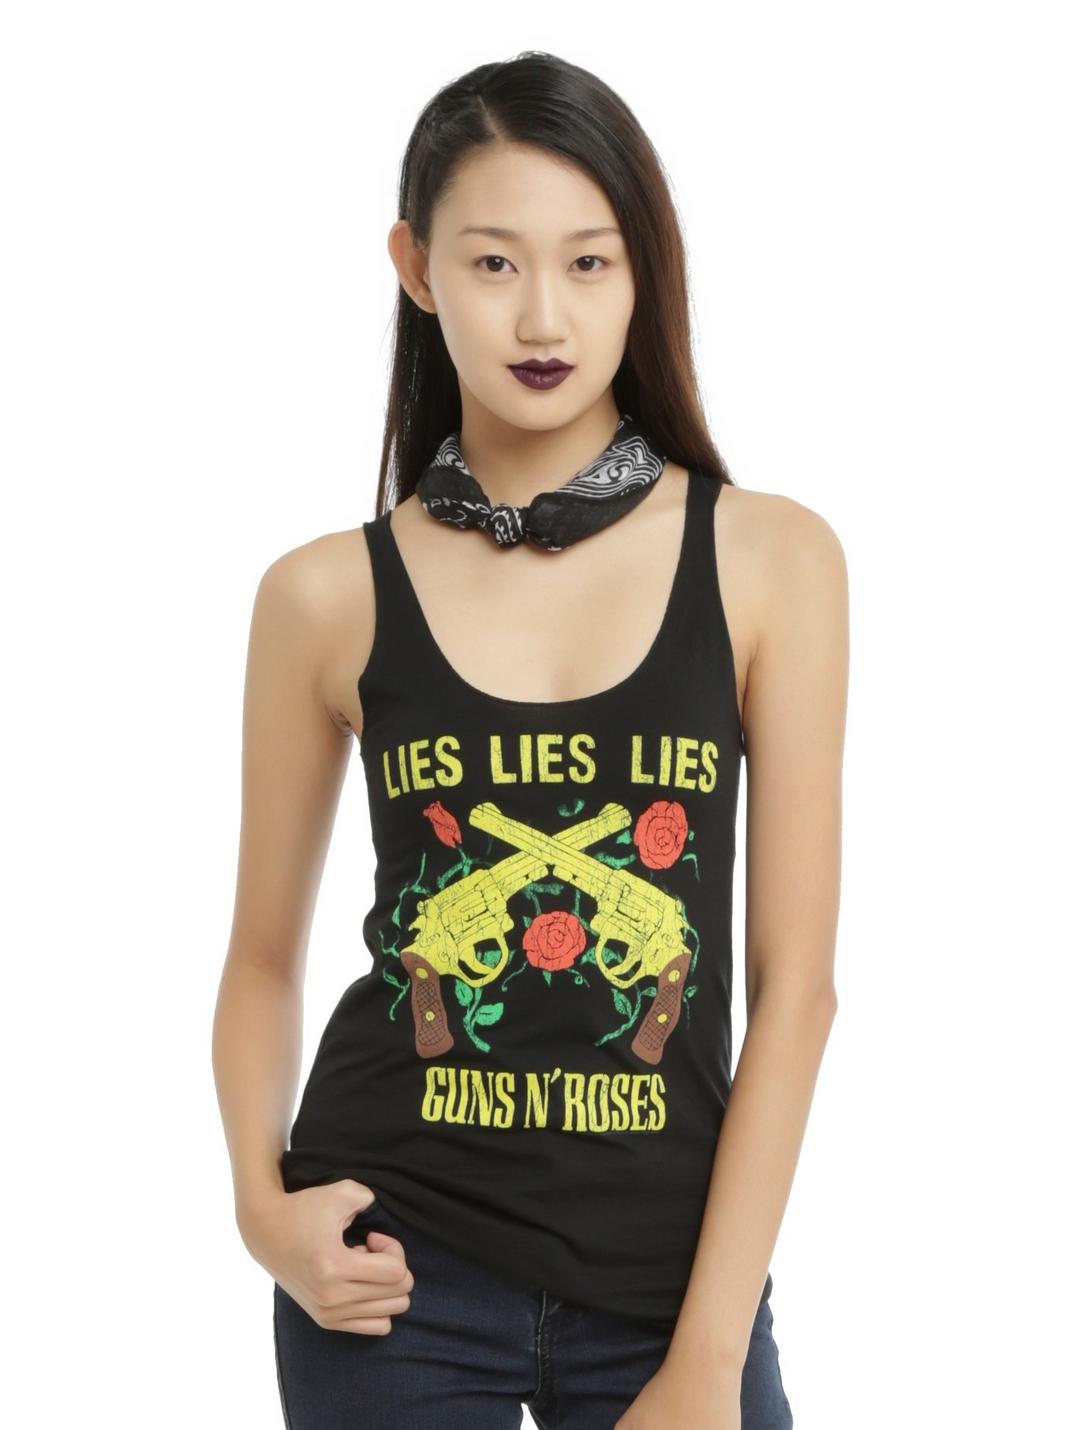 Guns N' Roses Lies Lies Lies Girls Tank Top, BLACK, hi-res